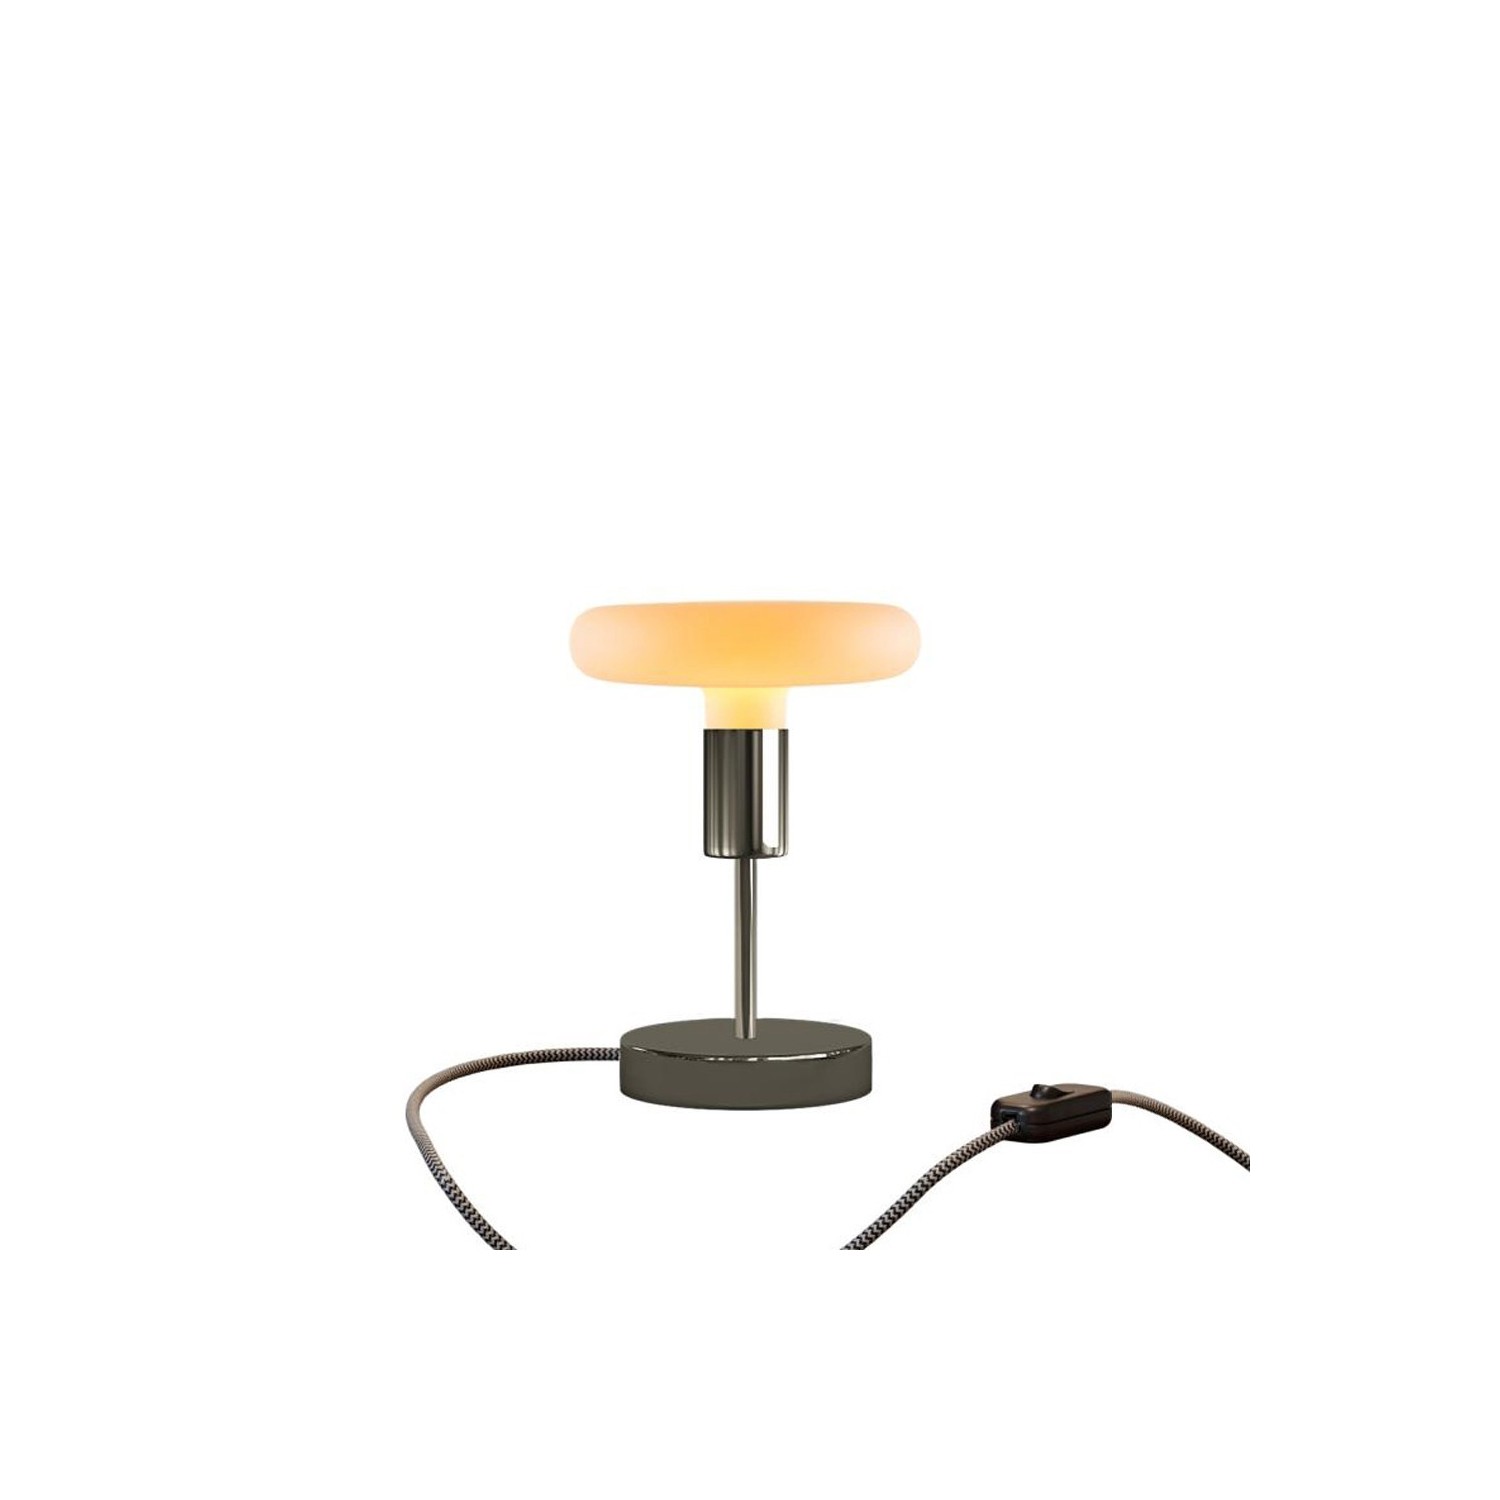 Alzaluce Dash Metal Table Lamp